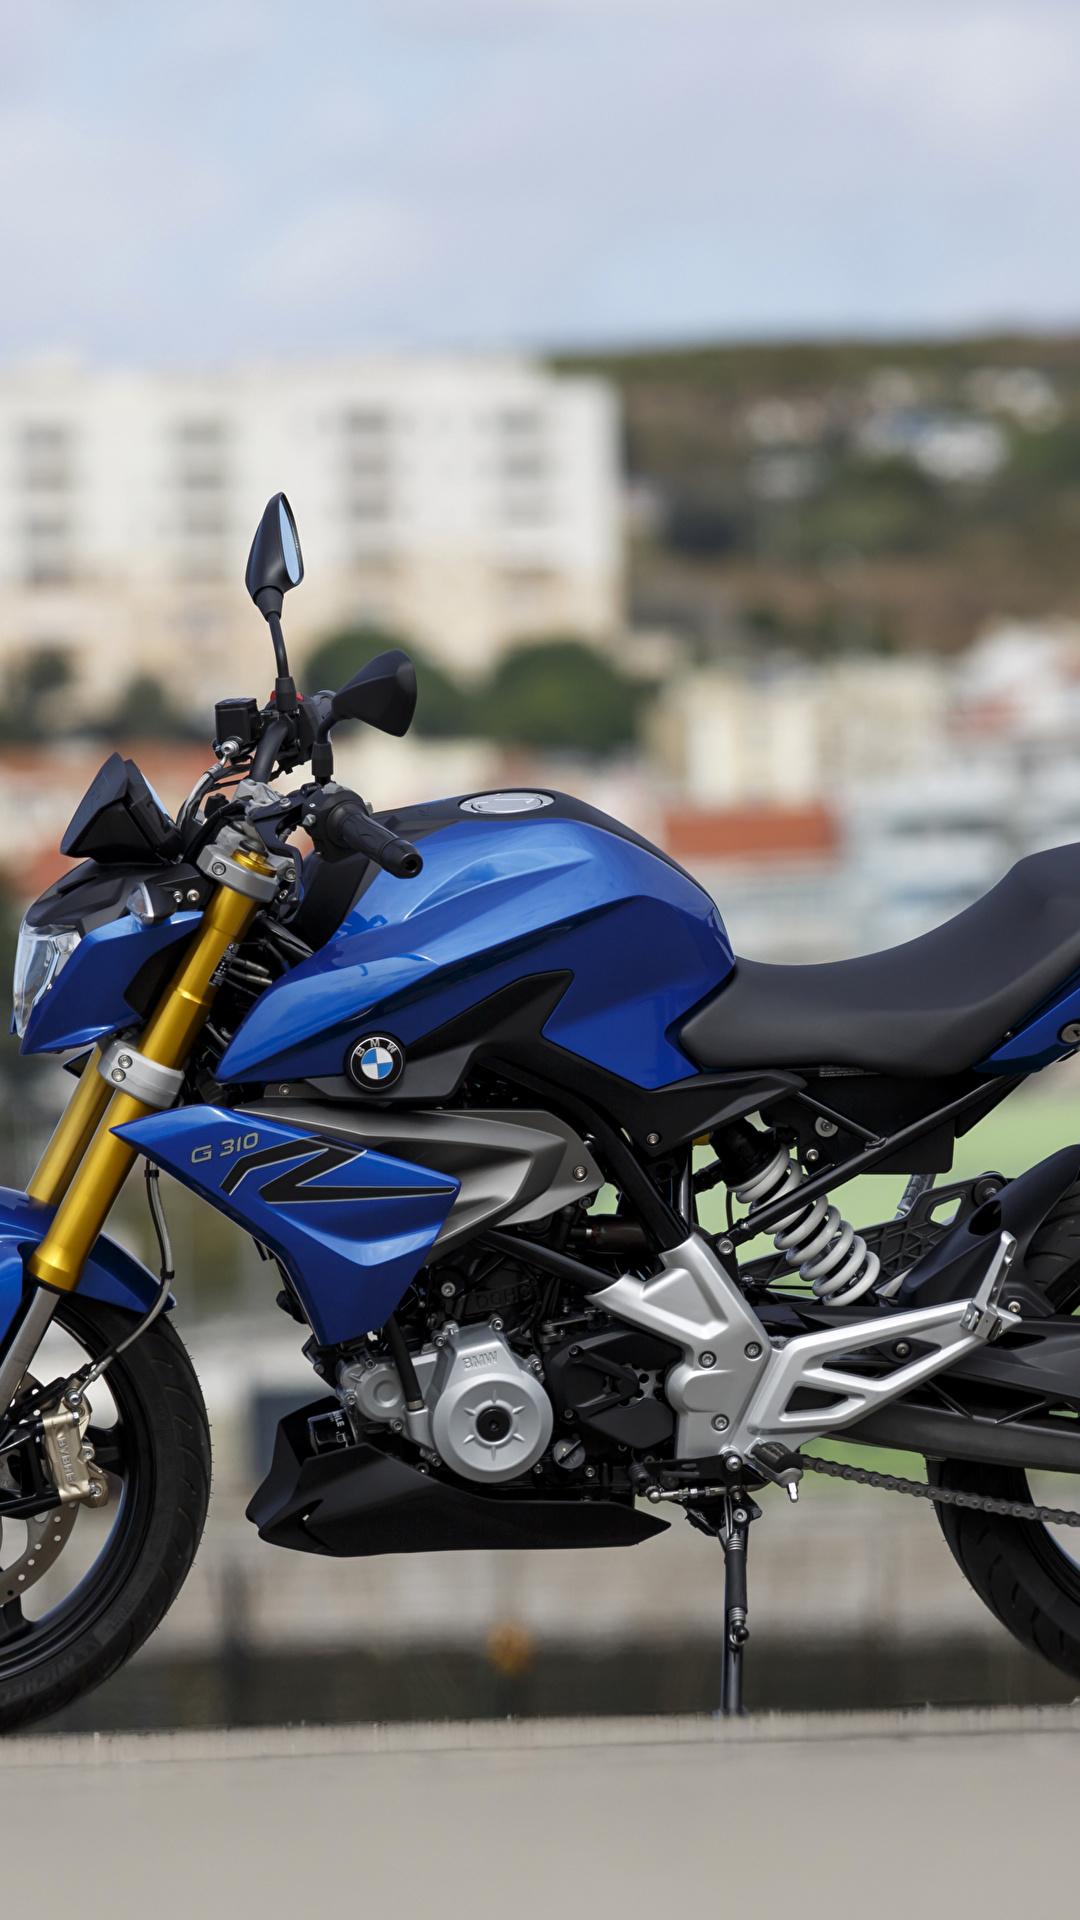 Image BMW 2015 16 G 310 R Blue Motorcycle 1080x1920